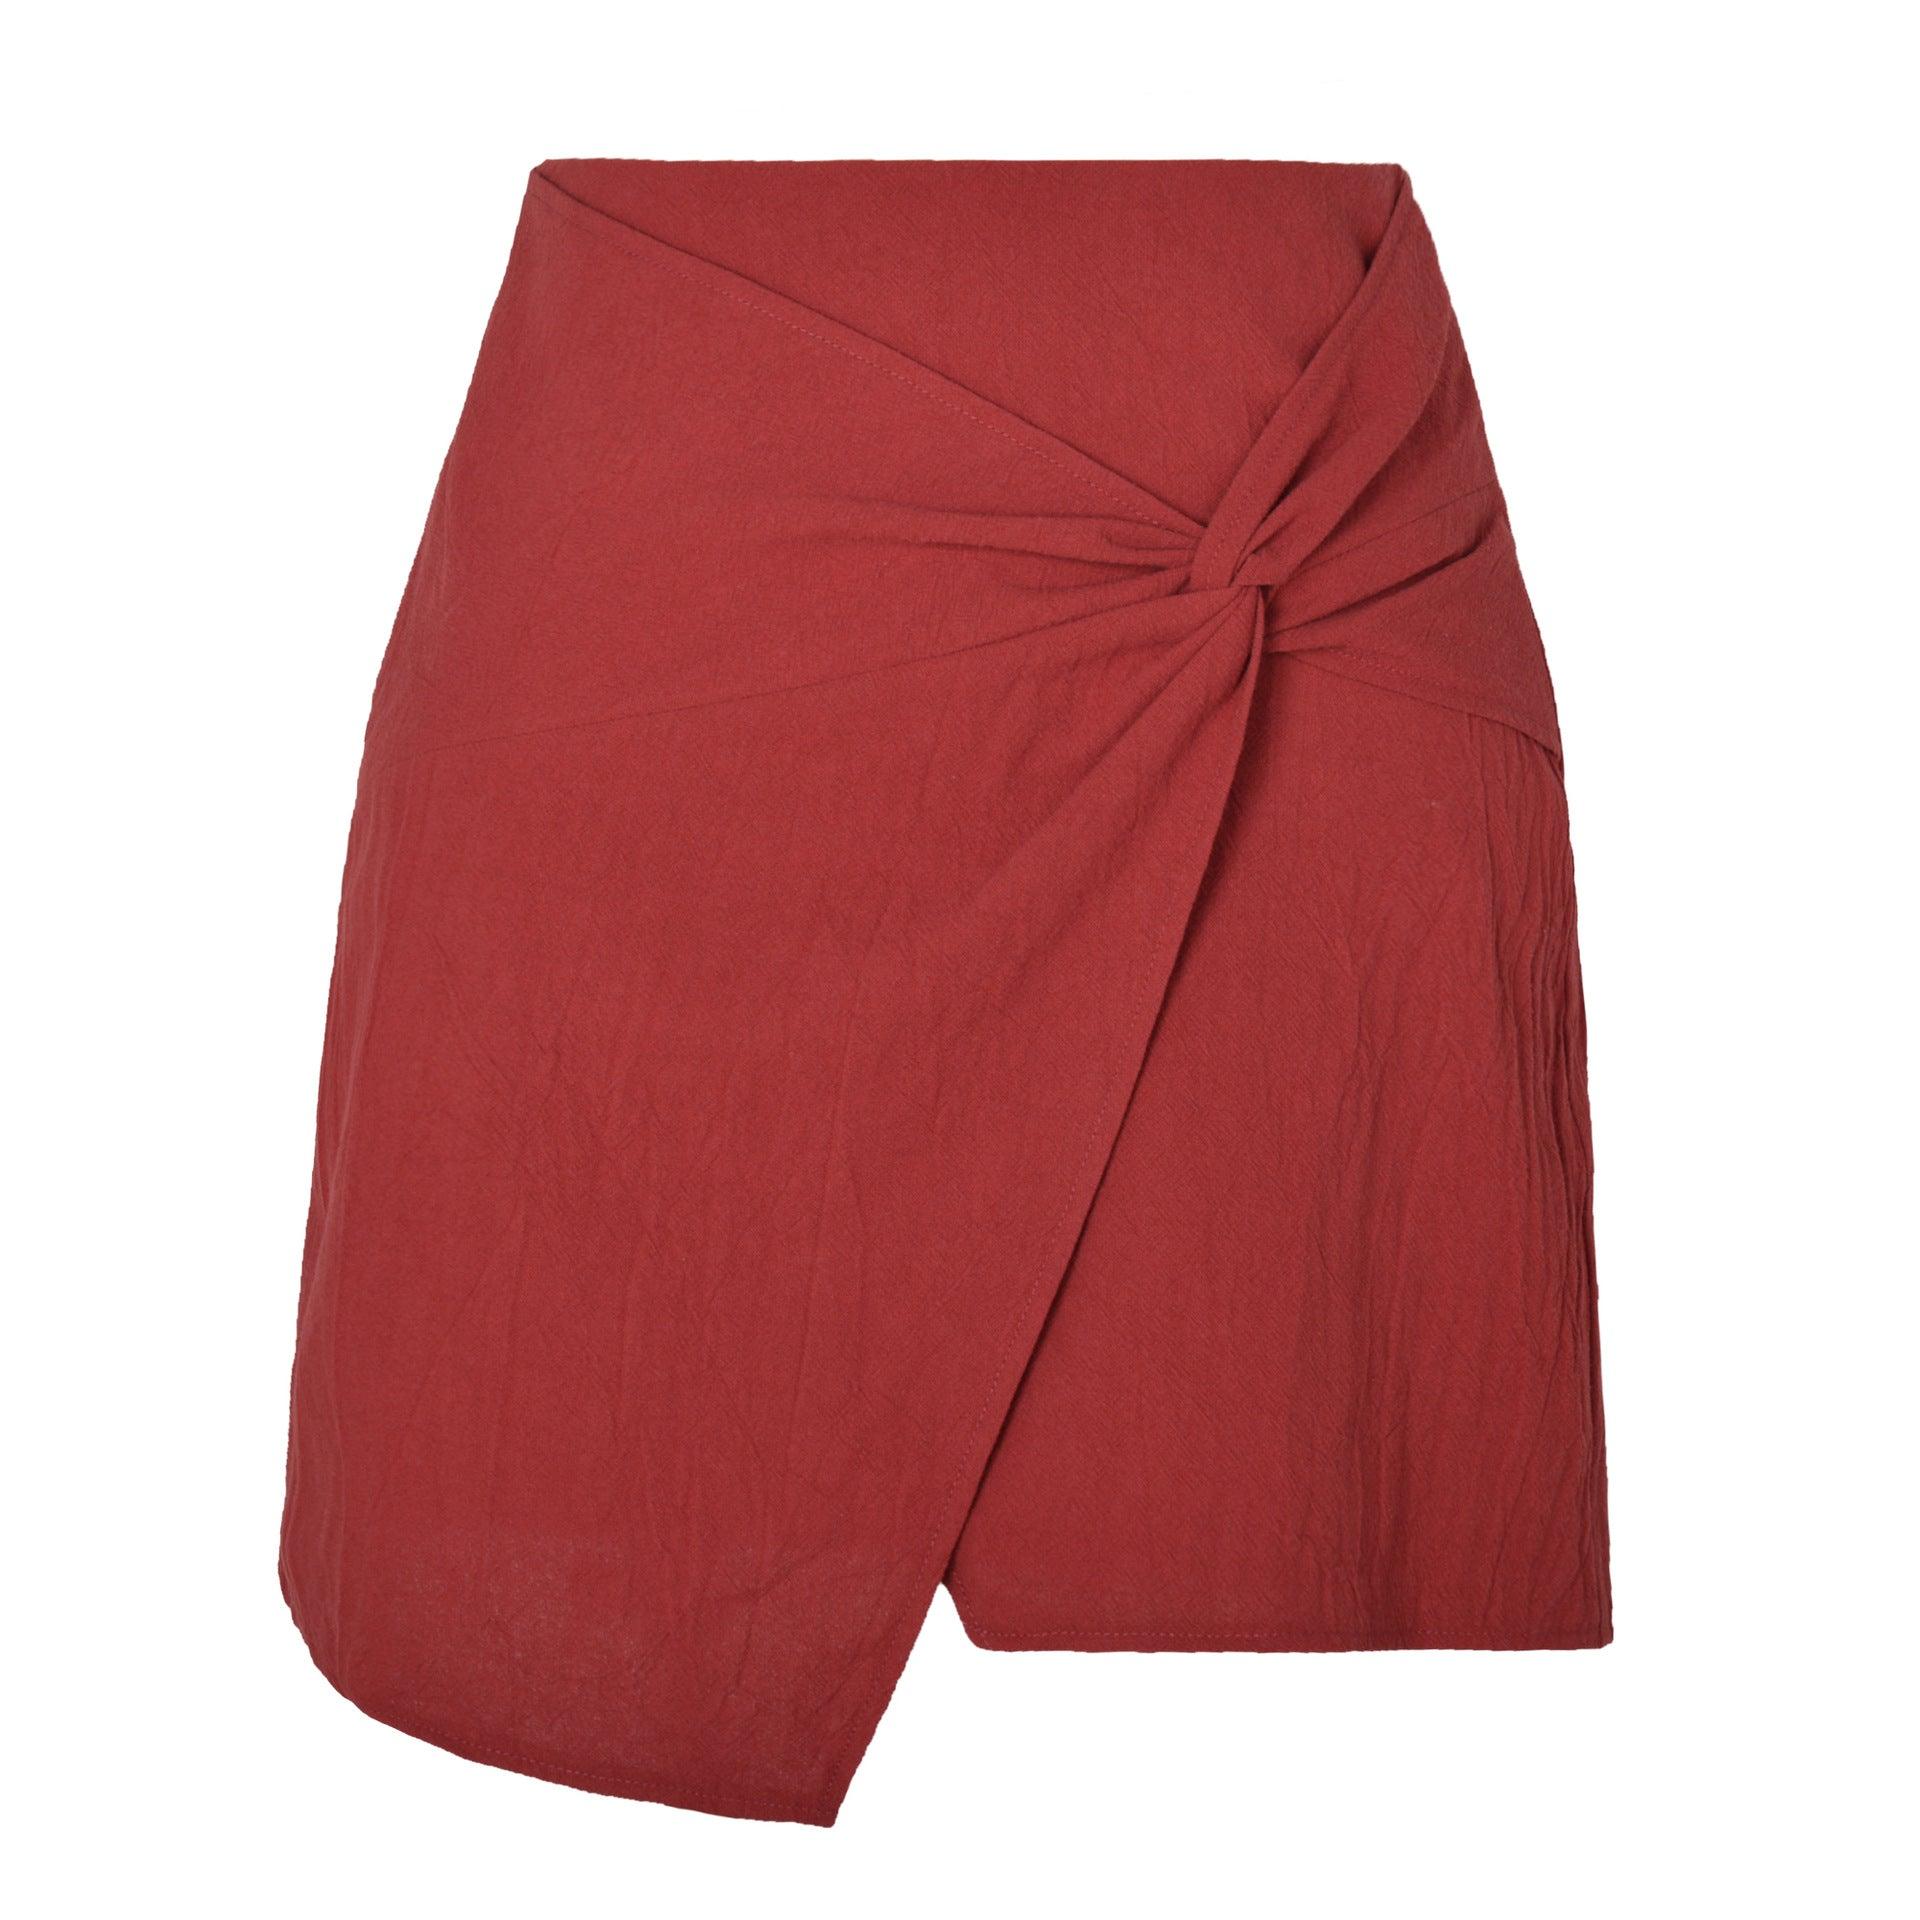 High-Waist Cotton-Linen Twisted Skirt for Women – Contemporary Short Style - Glinyt